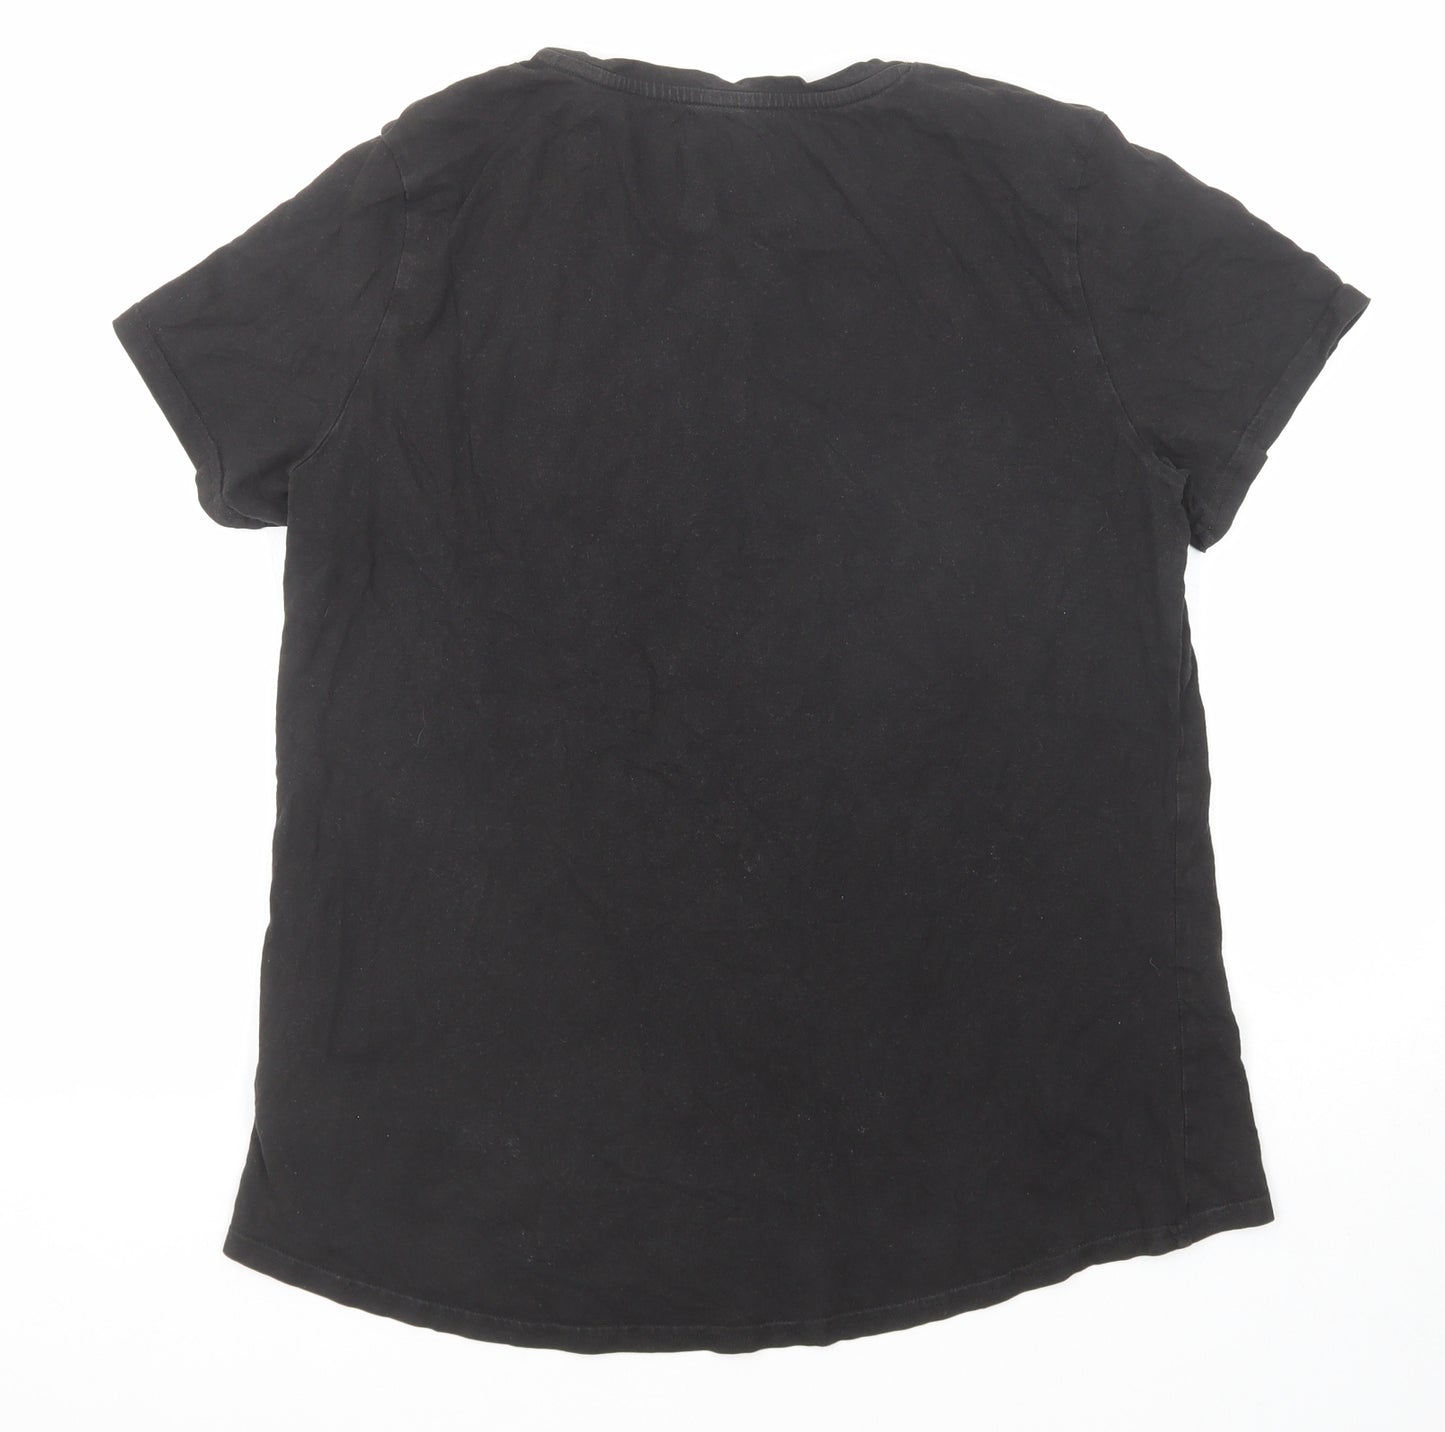 PUMA Womens Black Cotton Basic T-Shirt Size 18 Round Neck